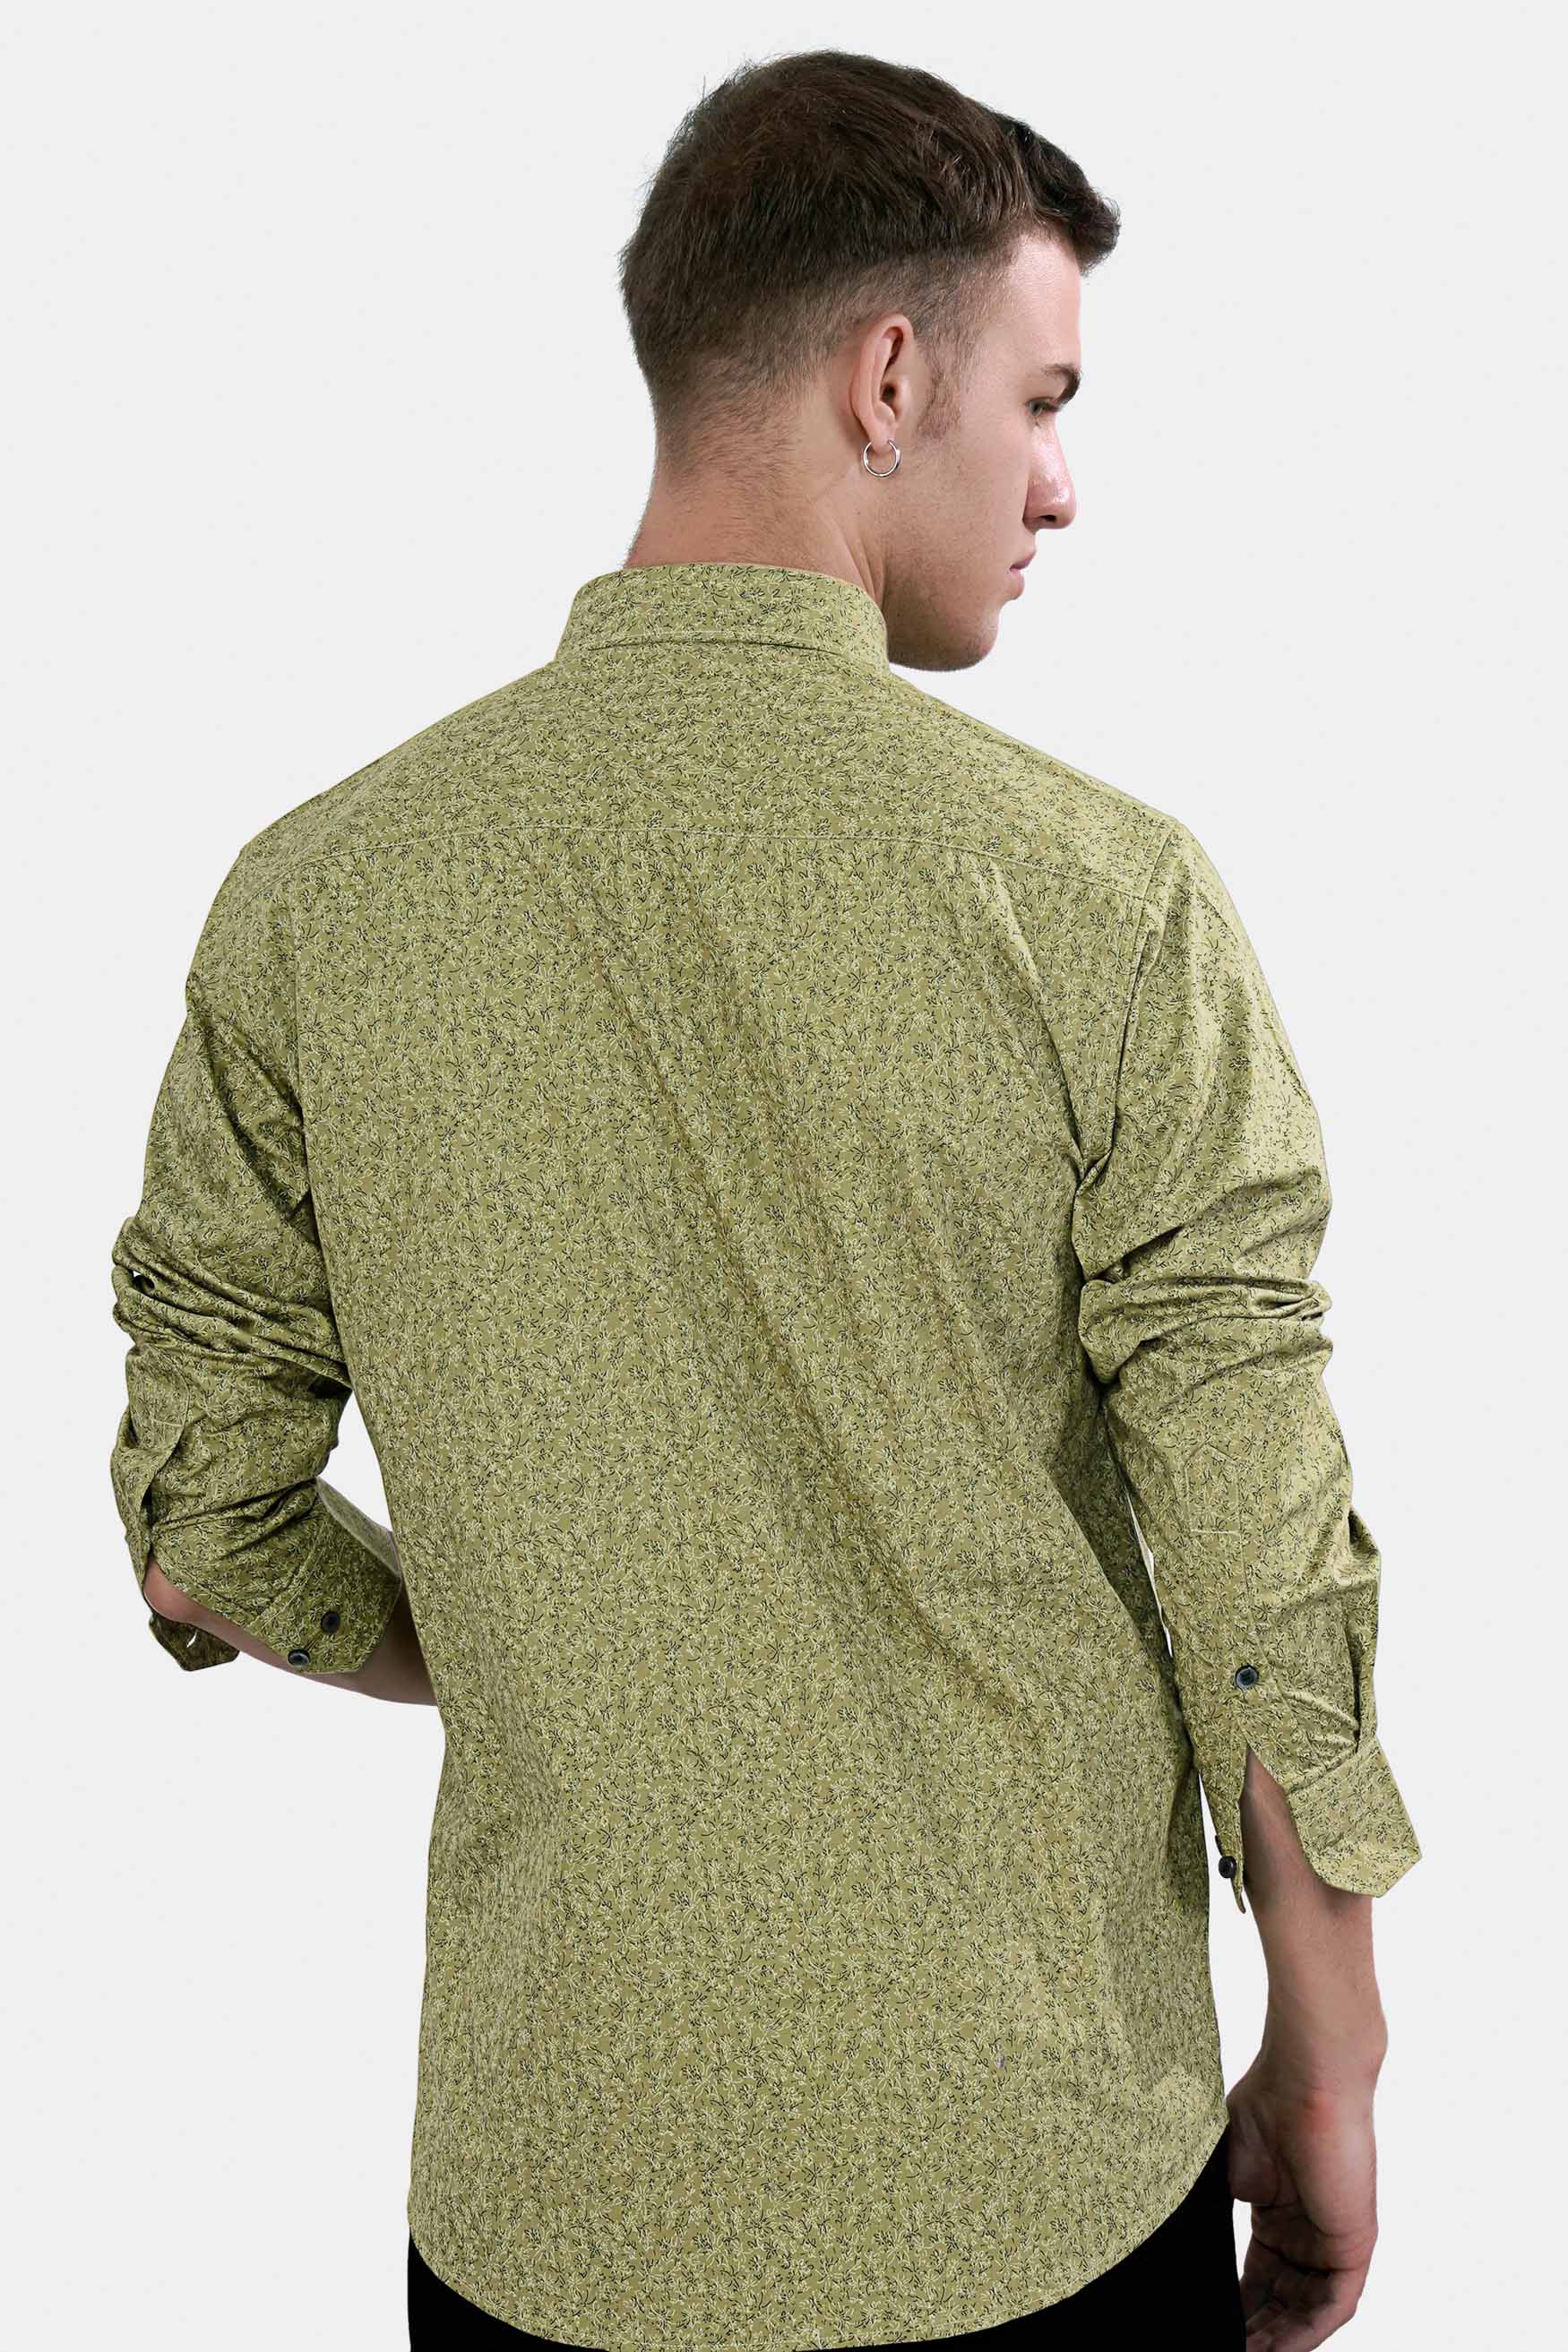 Husk Green Printed Premium Cotton Shirt